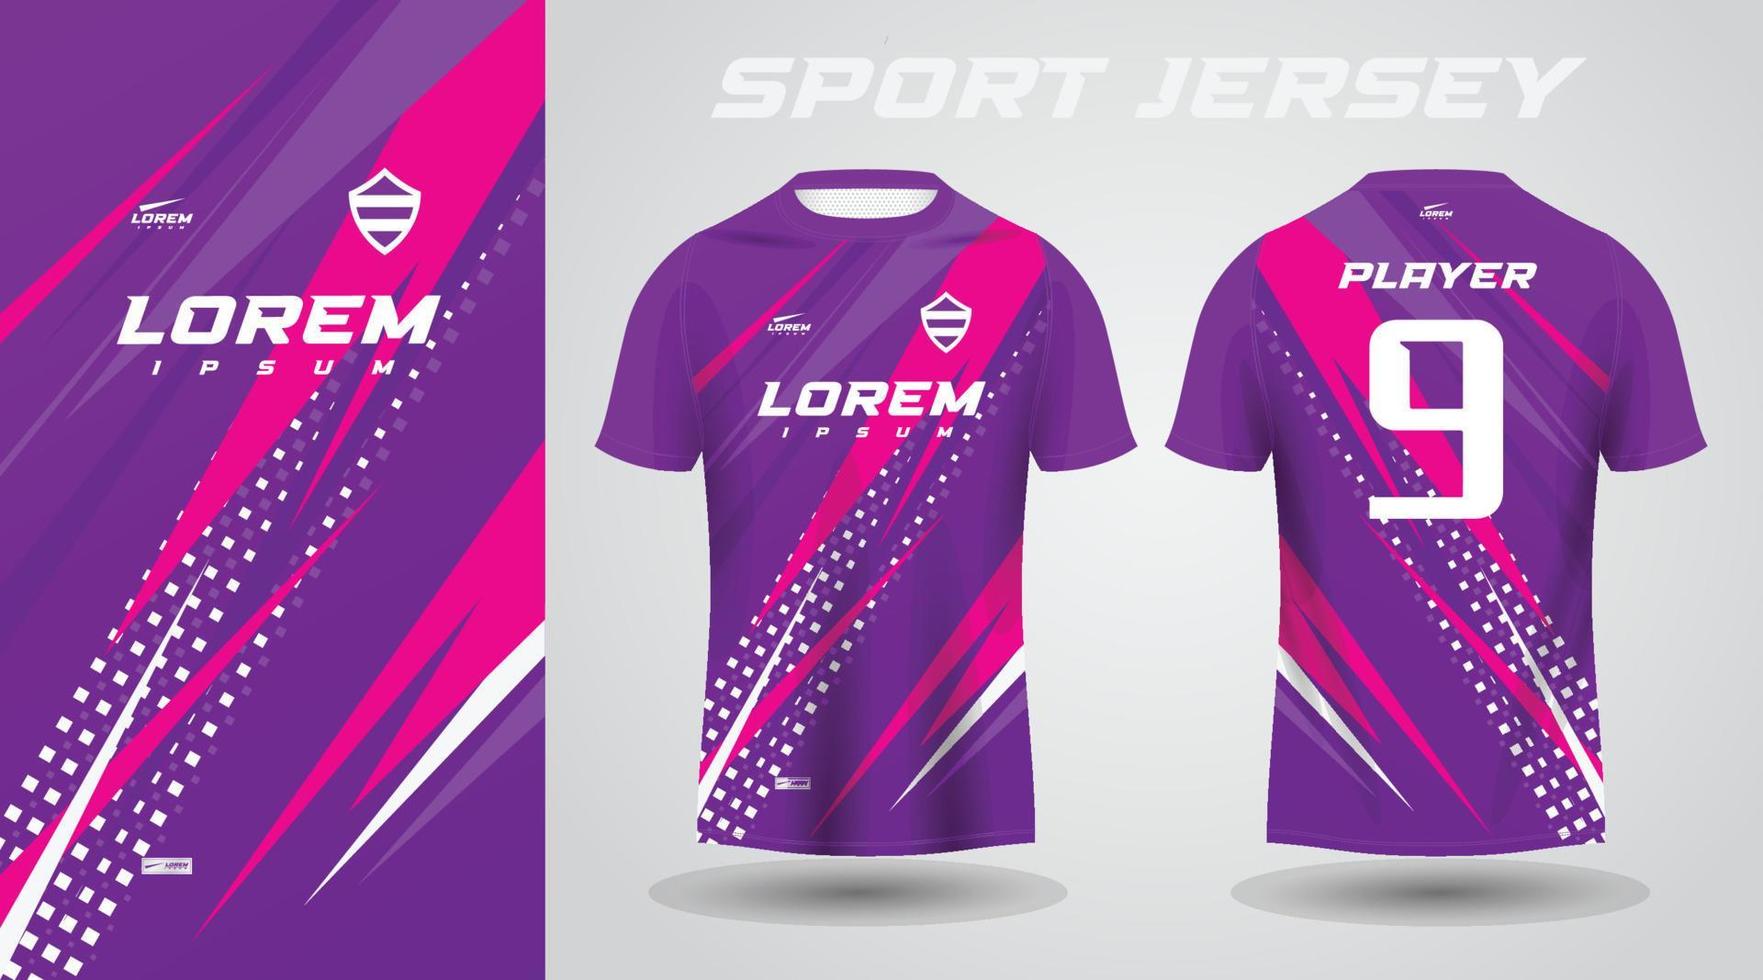 lila rosa Sport-Jersey-Design vektor